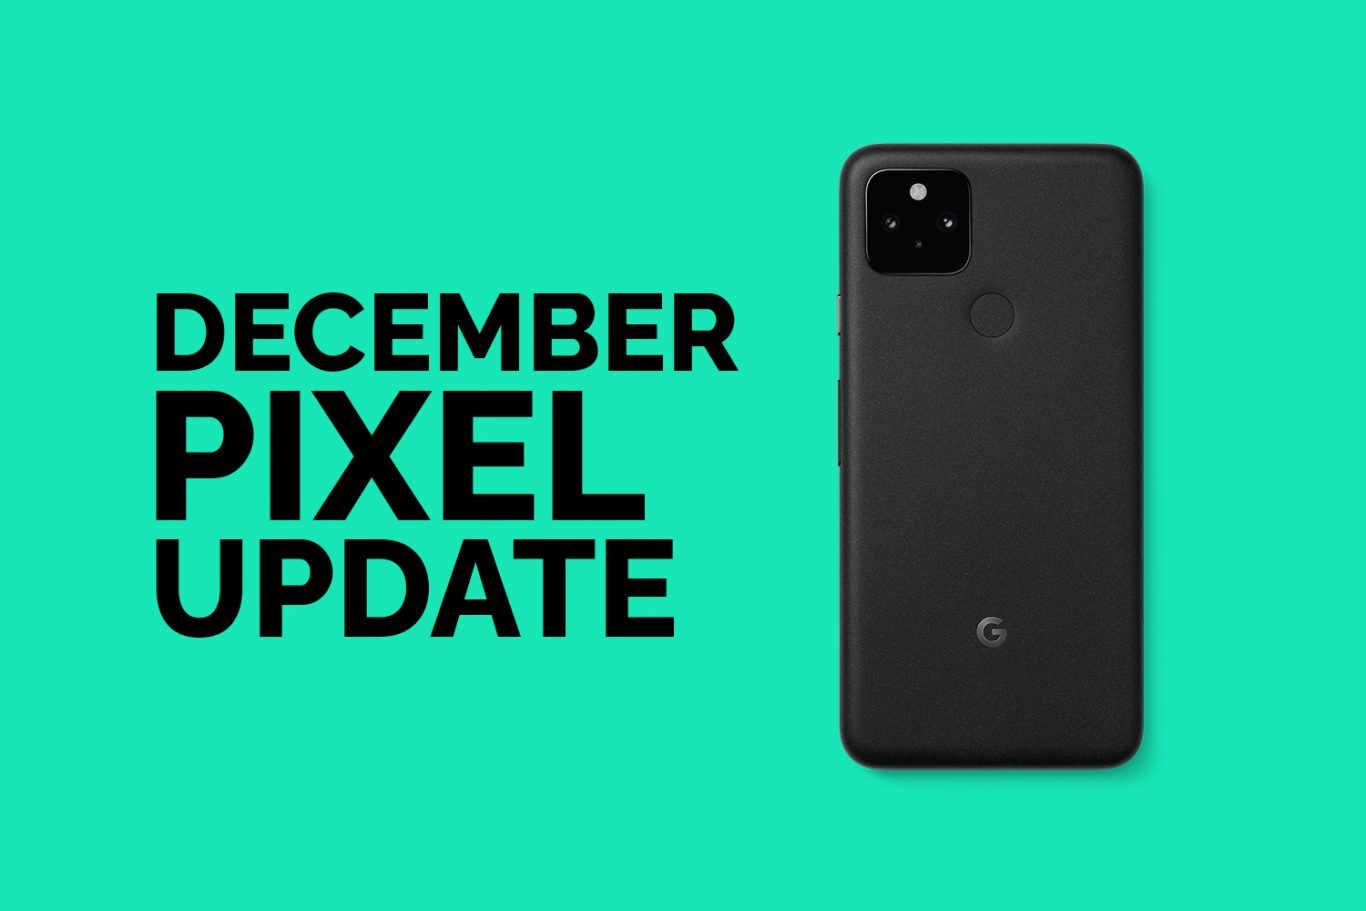 The Next Big Google Pixel Phone Update is Here